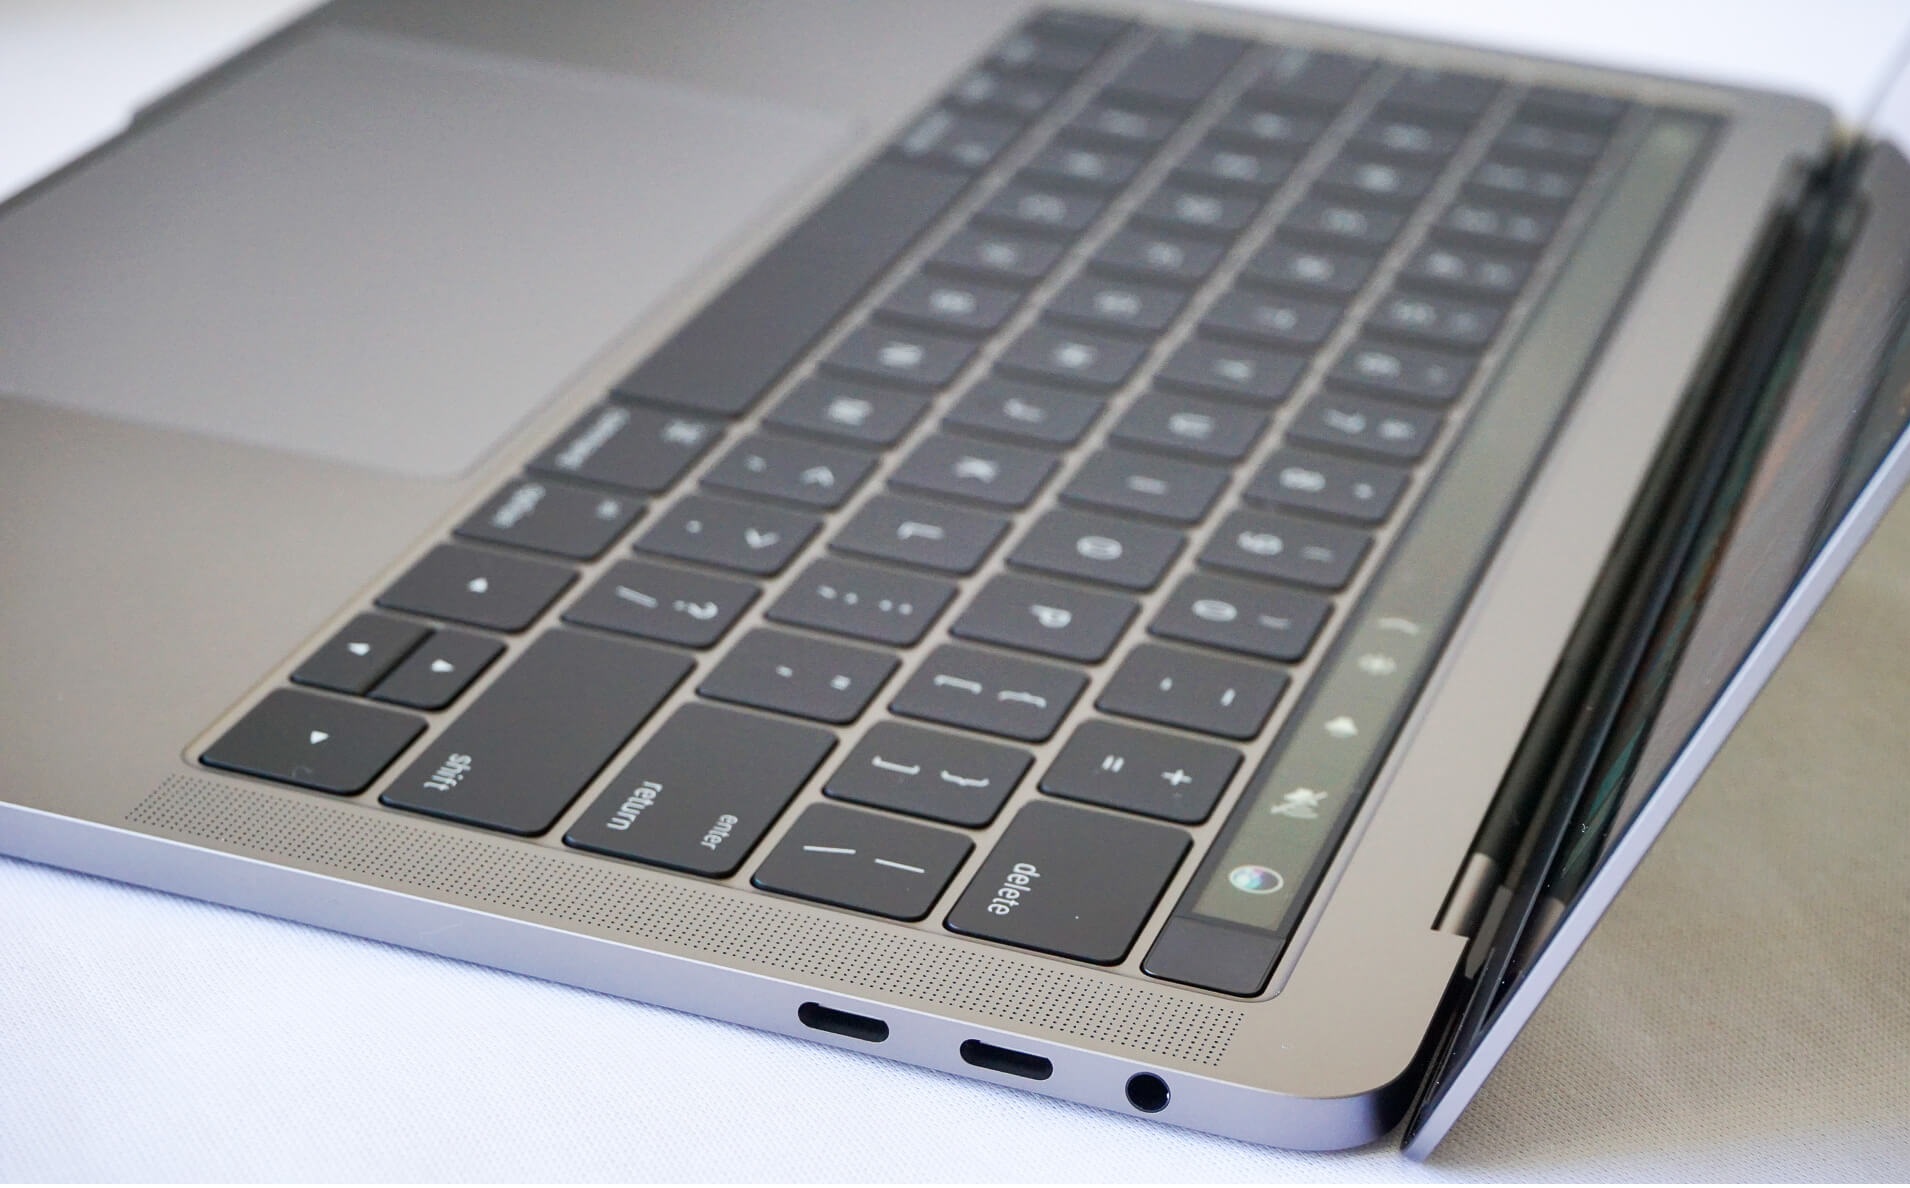 Apple MacBook Pro 13 Silver 2018 (MR9V2)